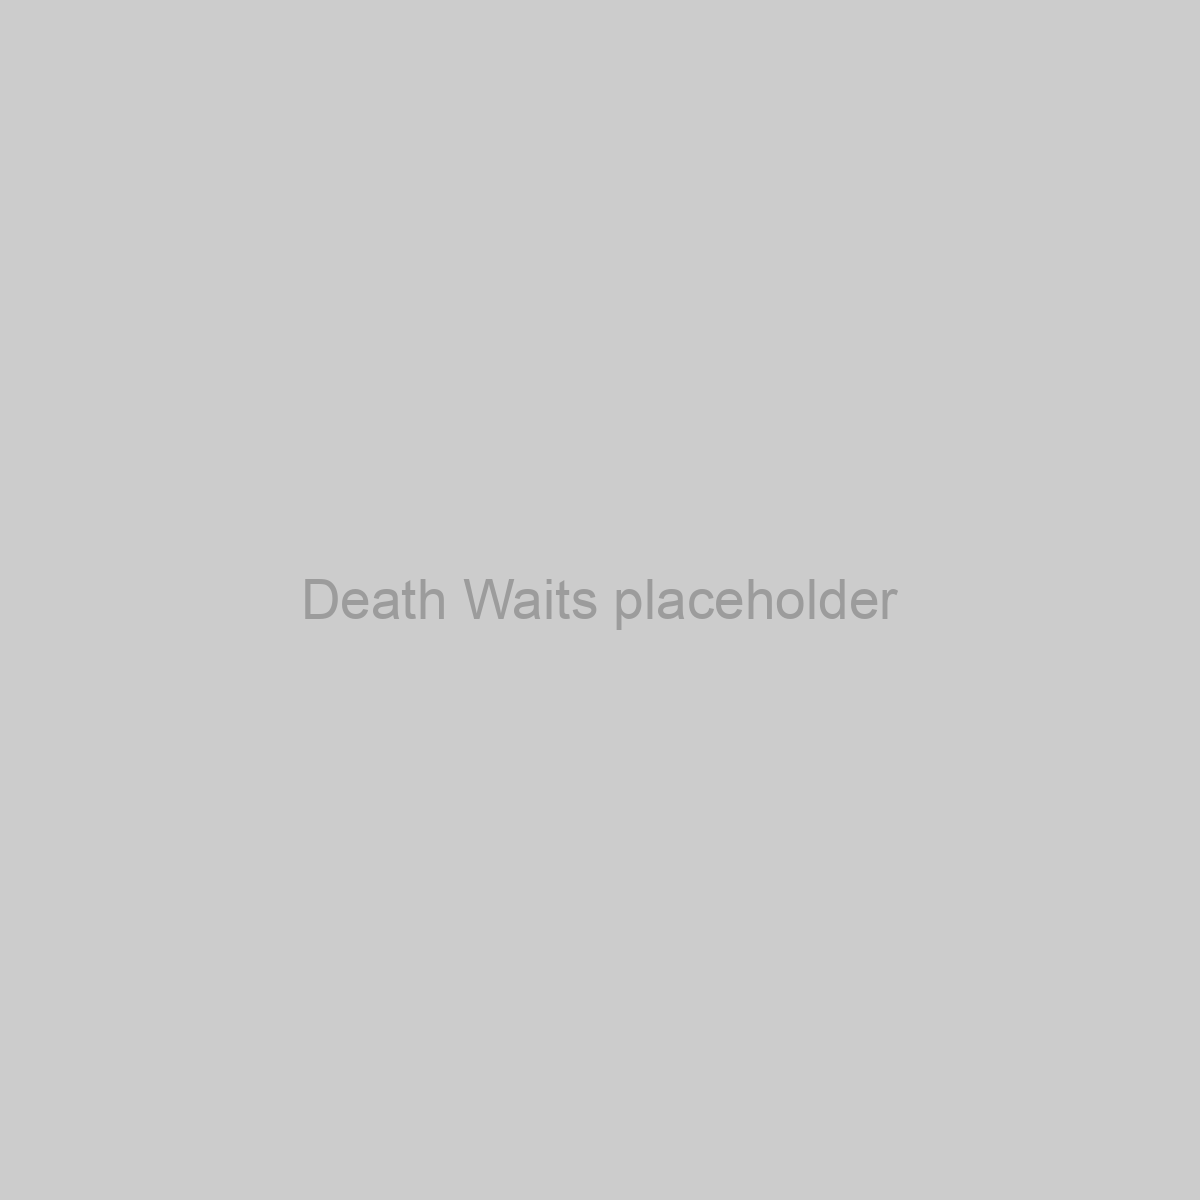 Death Waits Placeholder Image